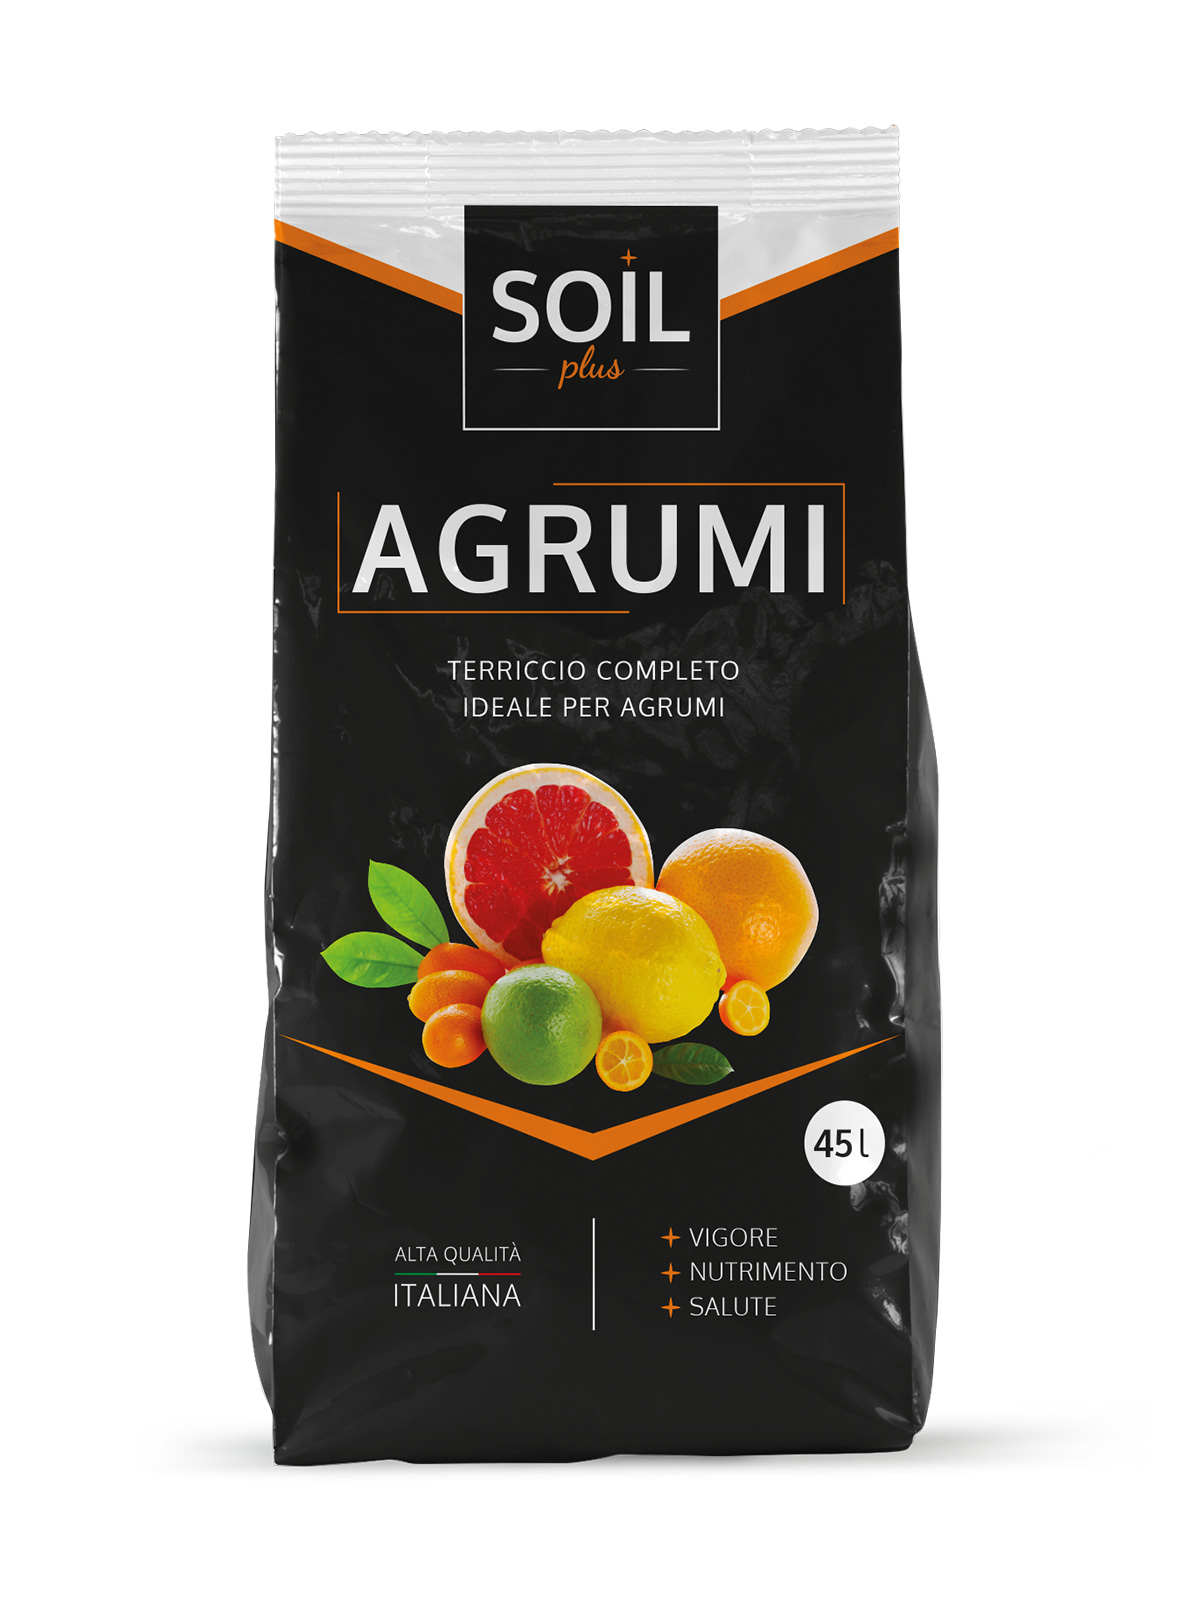 soil-plus-agrumi